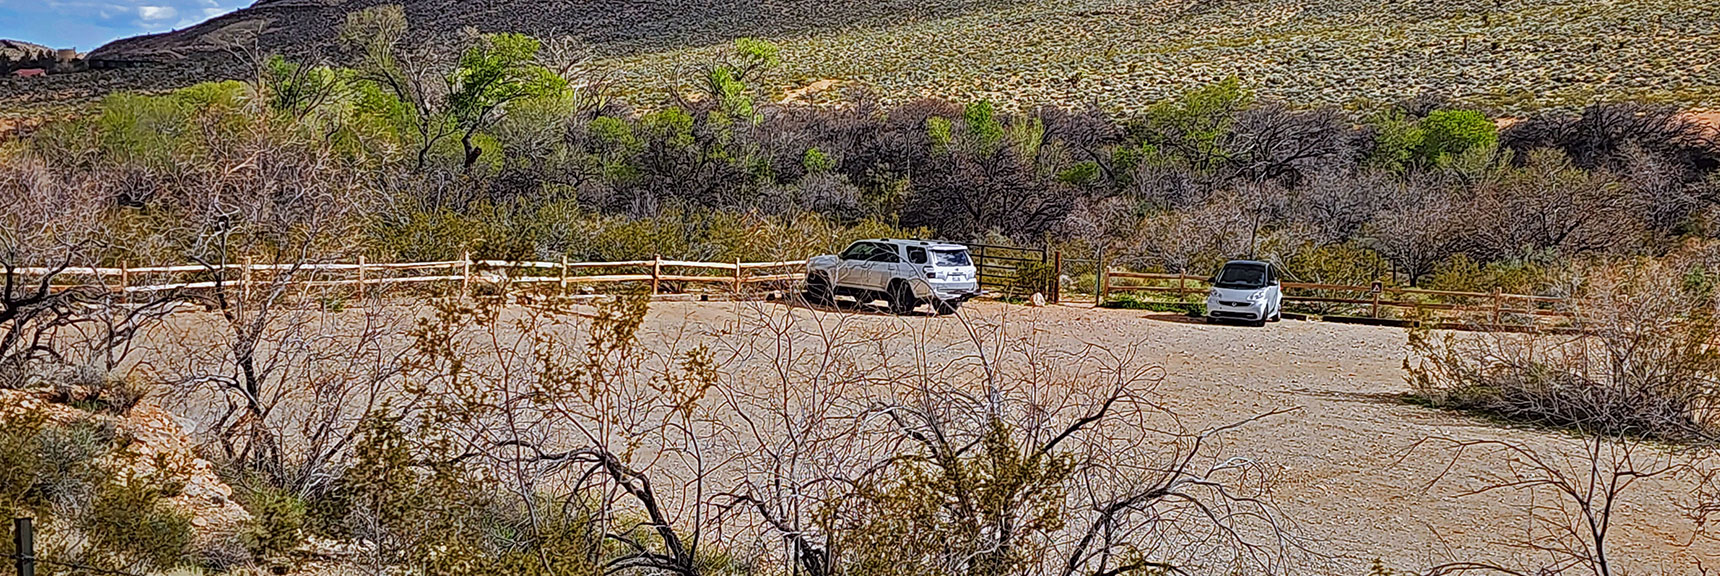 Arrival Back at Wheeler Spring Camp Parking Area. | Western High Ridge | Blue Diamond Hill, Nevada